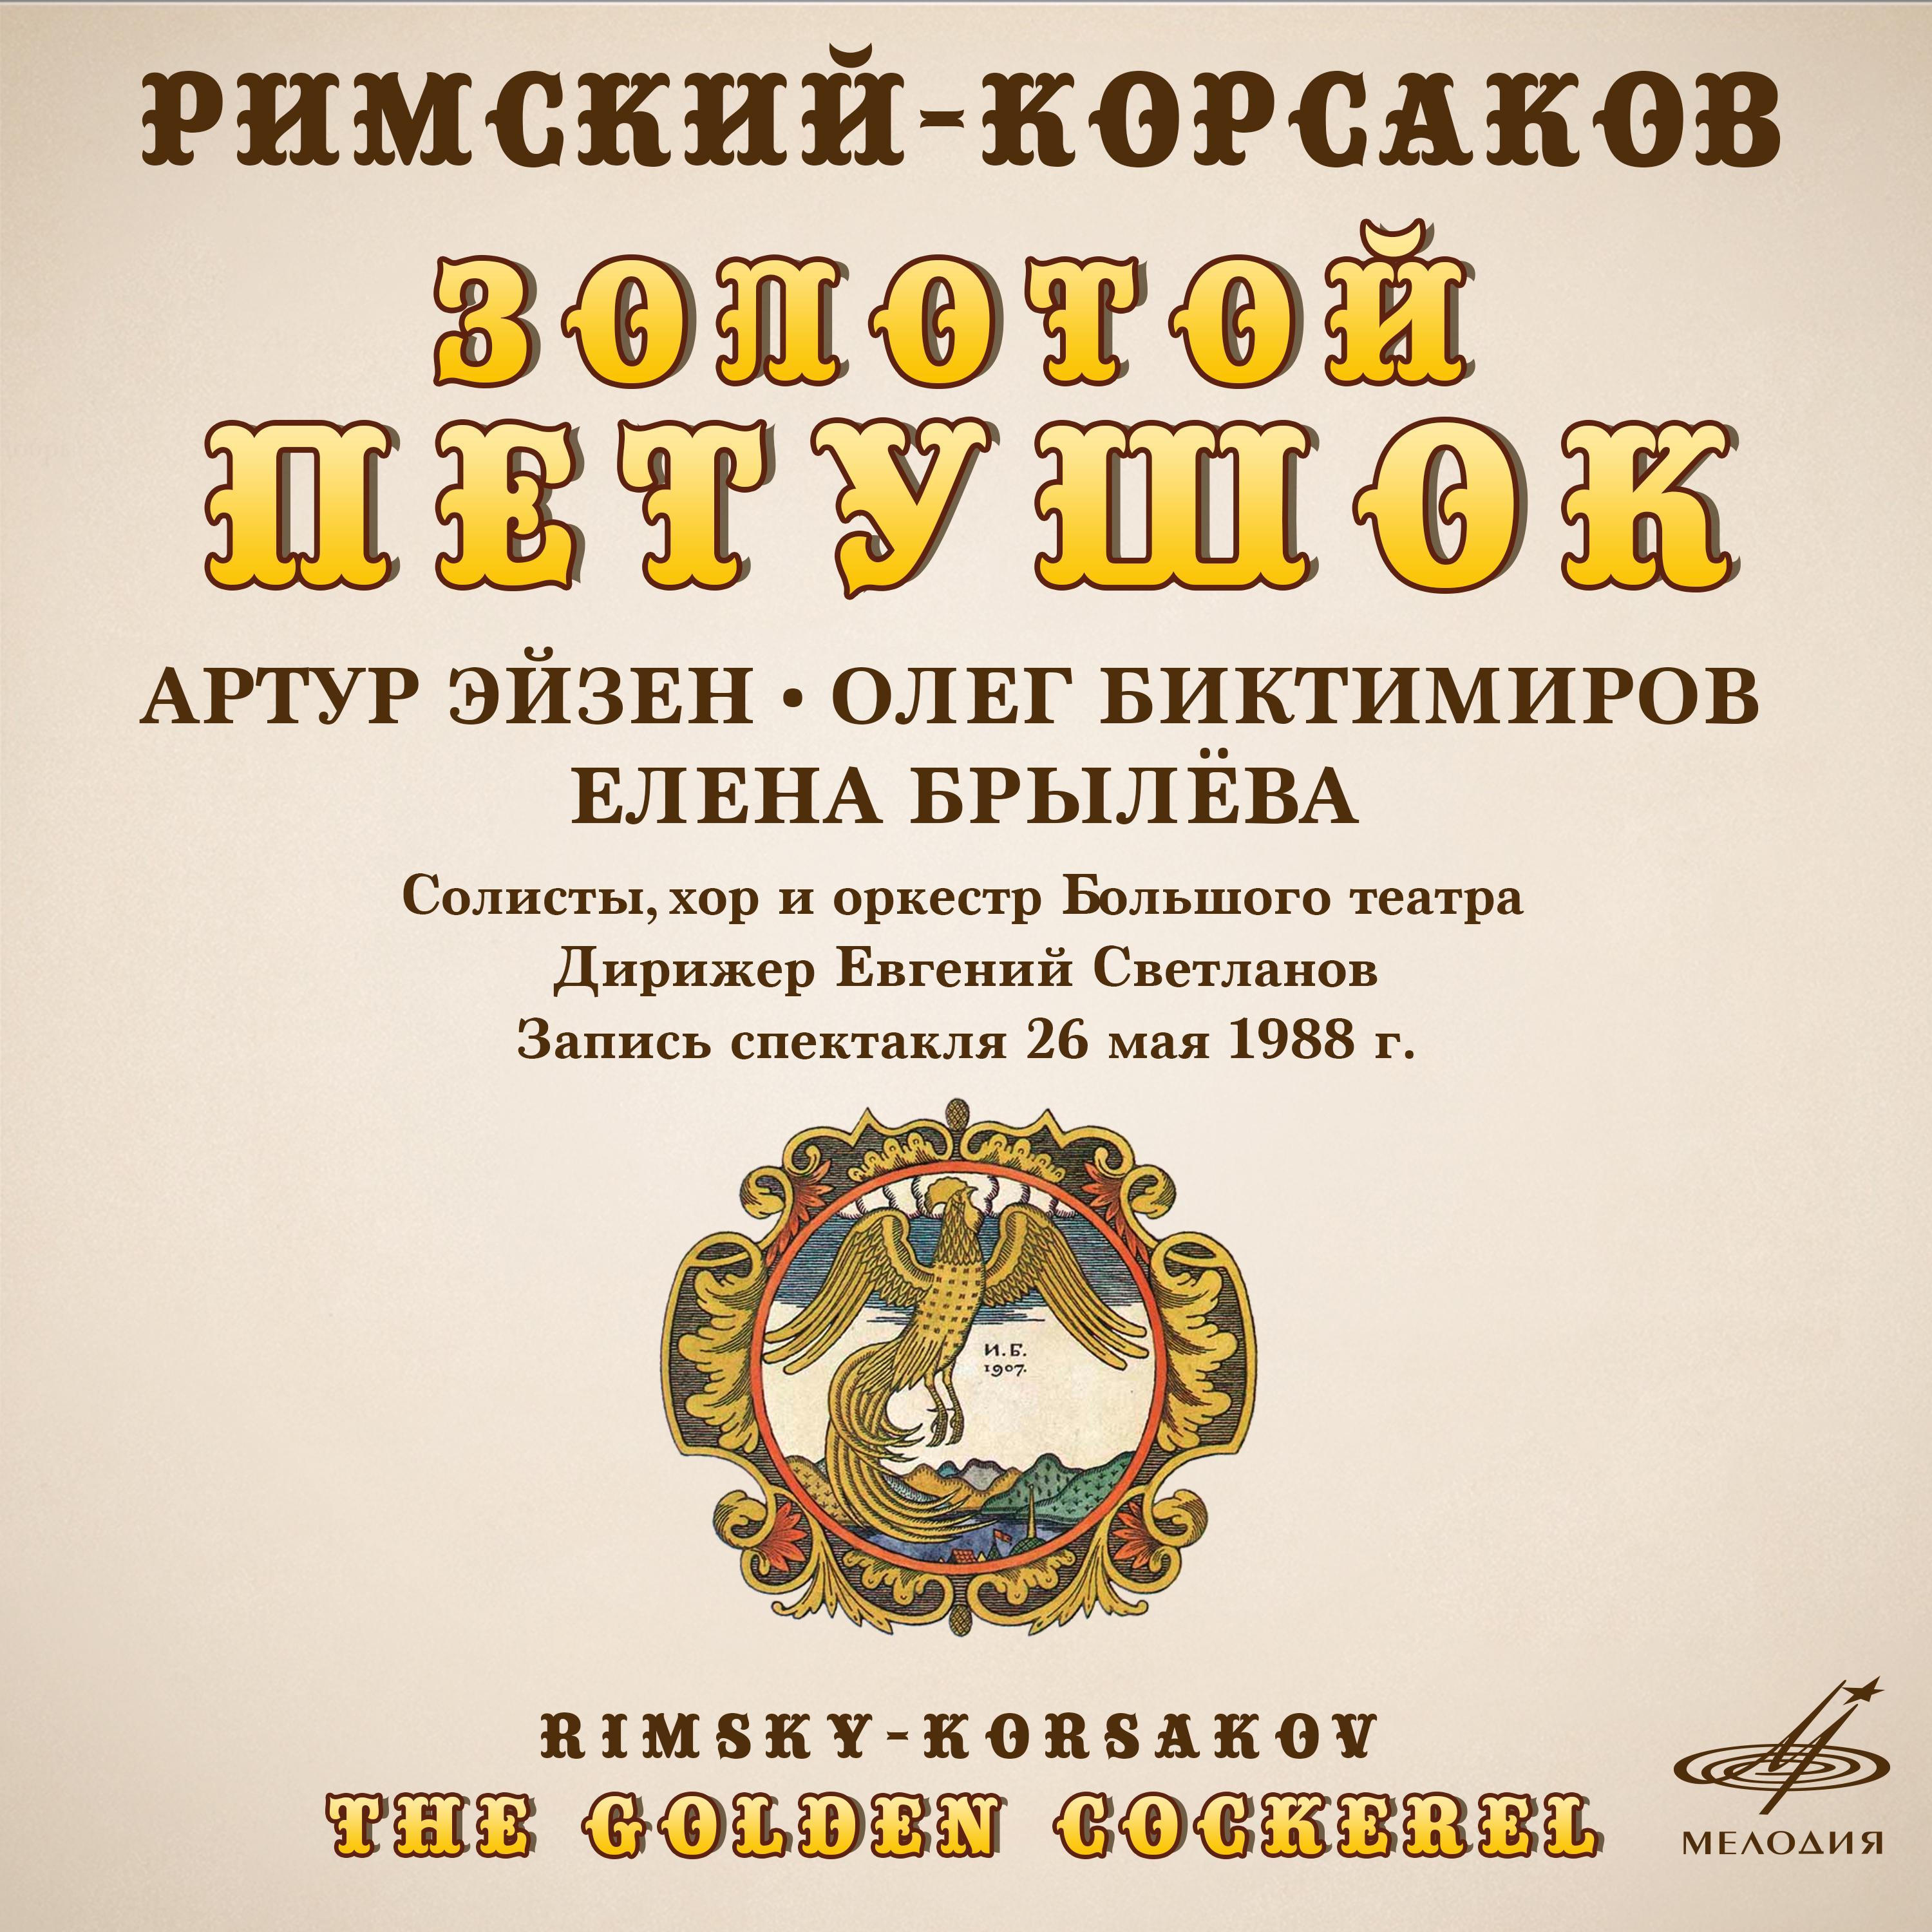 Nikolai Rimsky-Korsakov - The Golden Cockerel, Act I: 